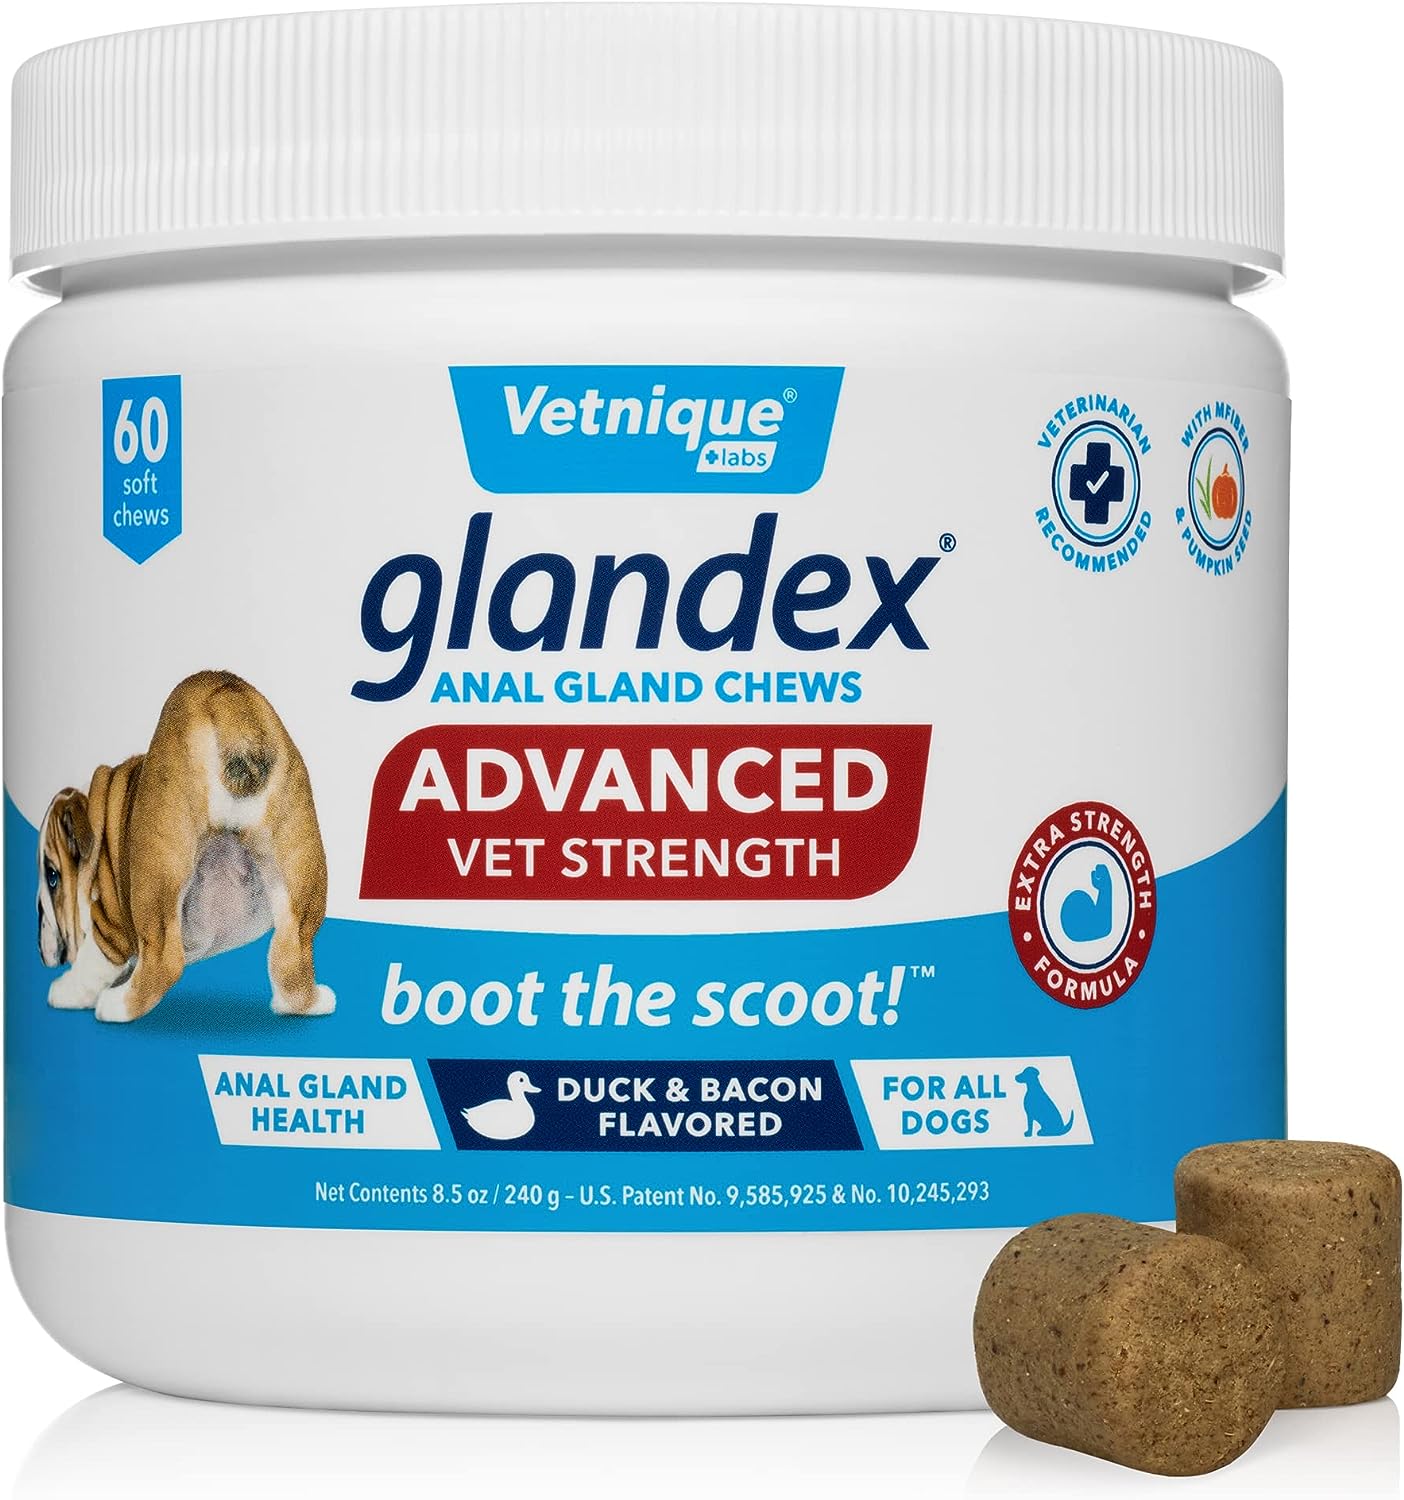 Vetnique Labs Glandex Anal Gland Chews